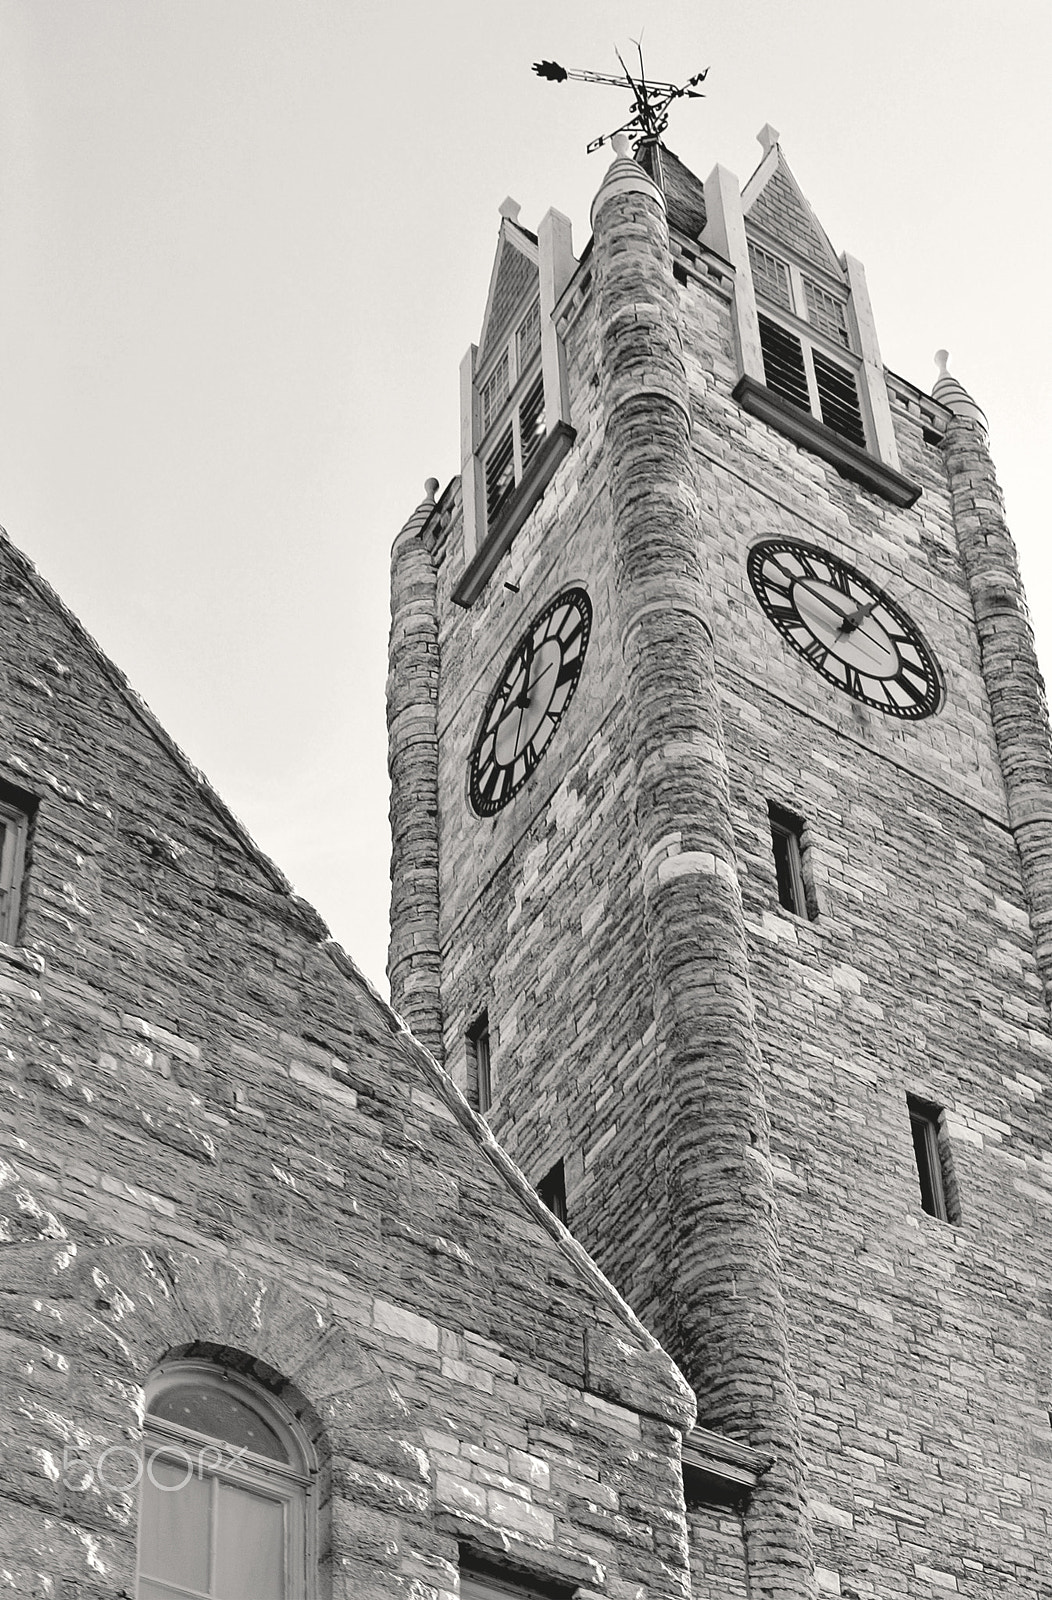 Nikon 1 J1 sample photo. Church clock tower photography